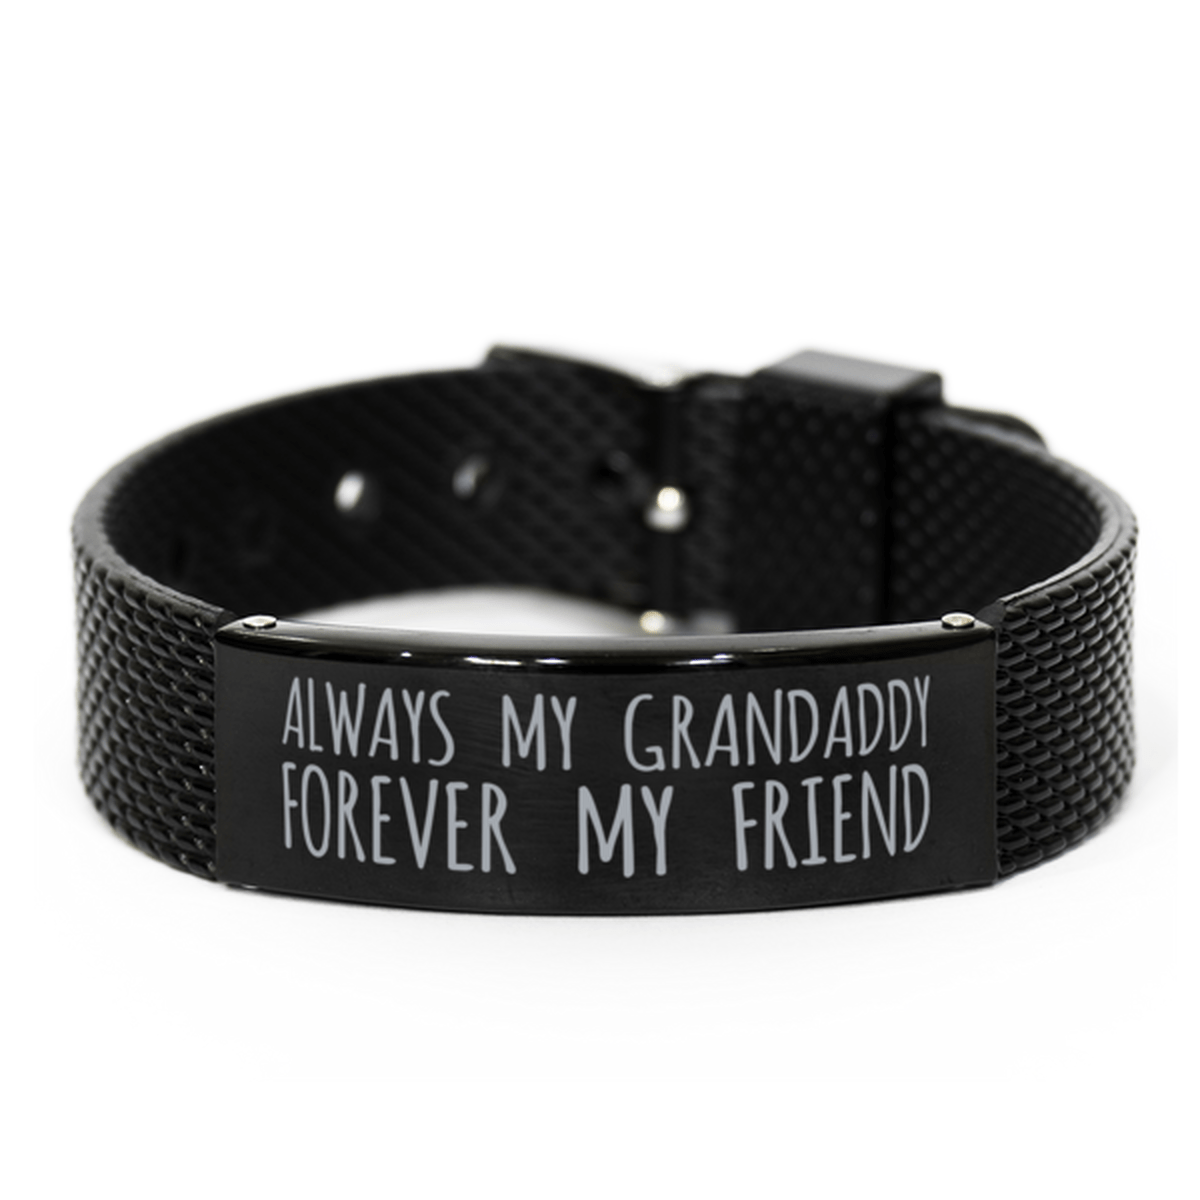 Inspirational Grandaddy Black Shark Mesh Bracelet, Always My Grandaddy Forever My Friend, Best Birthday Gifts for Family Friends